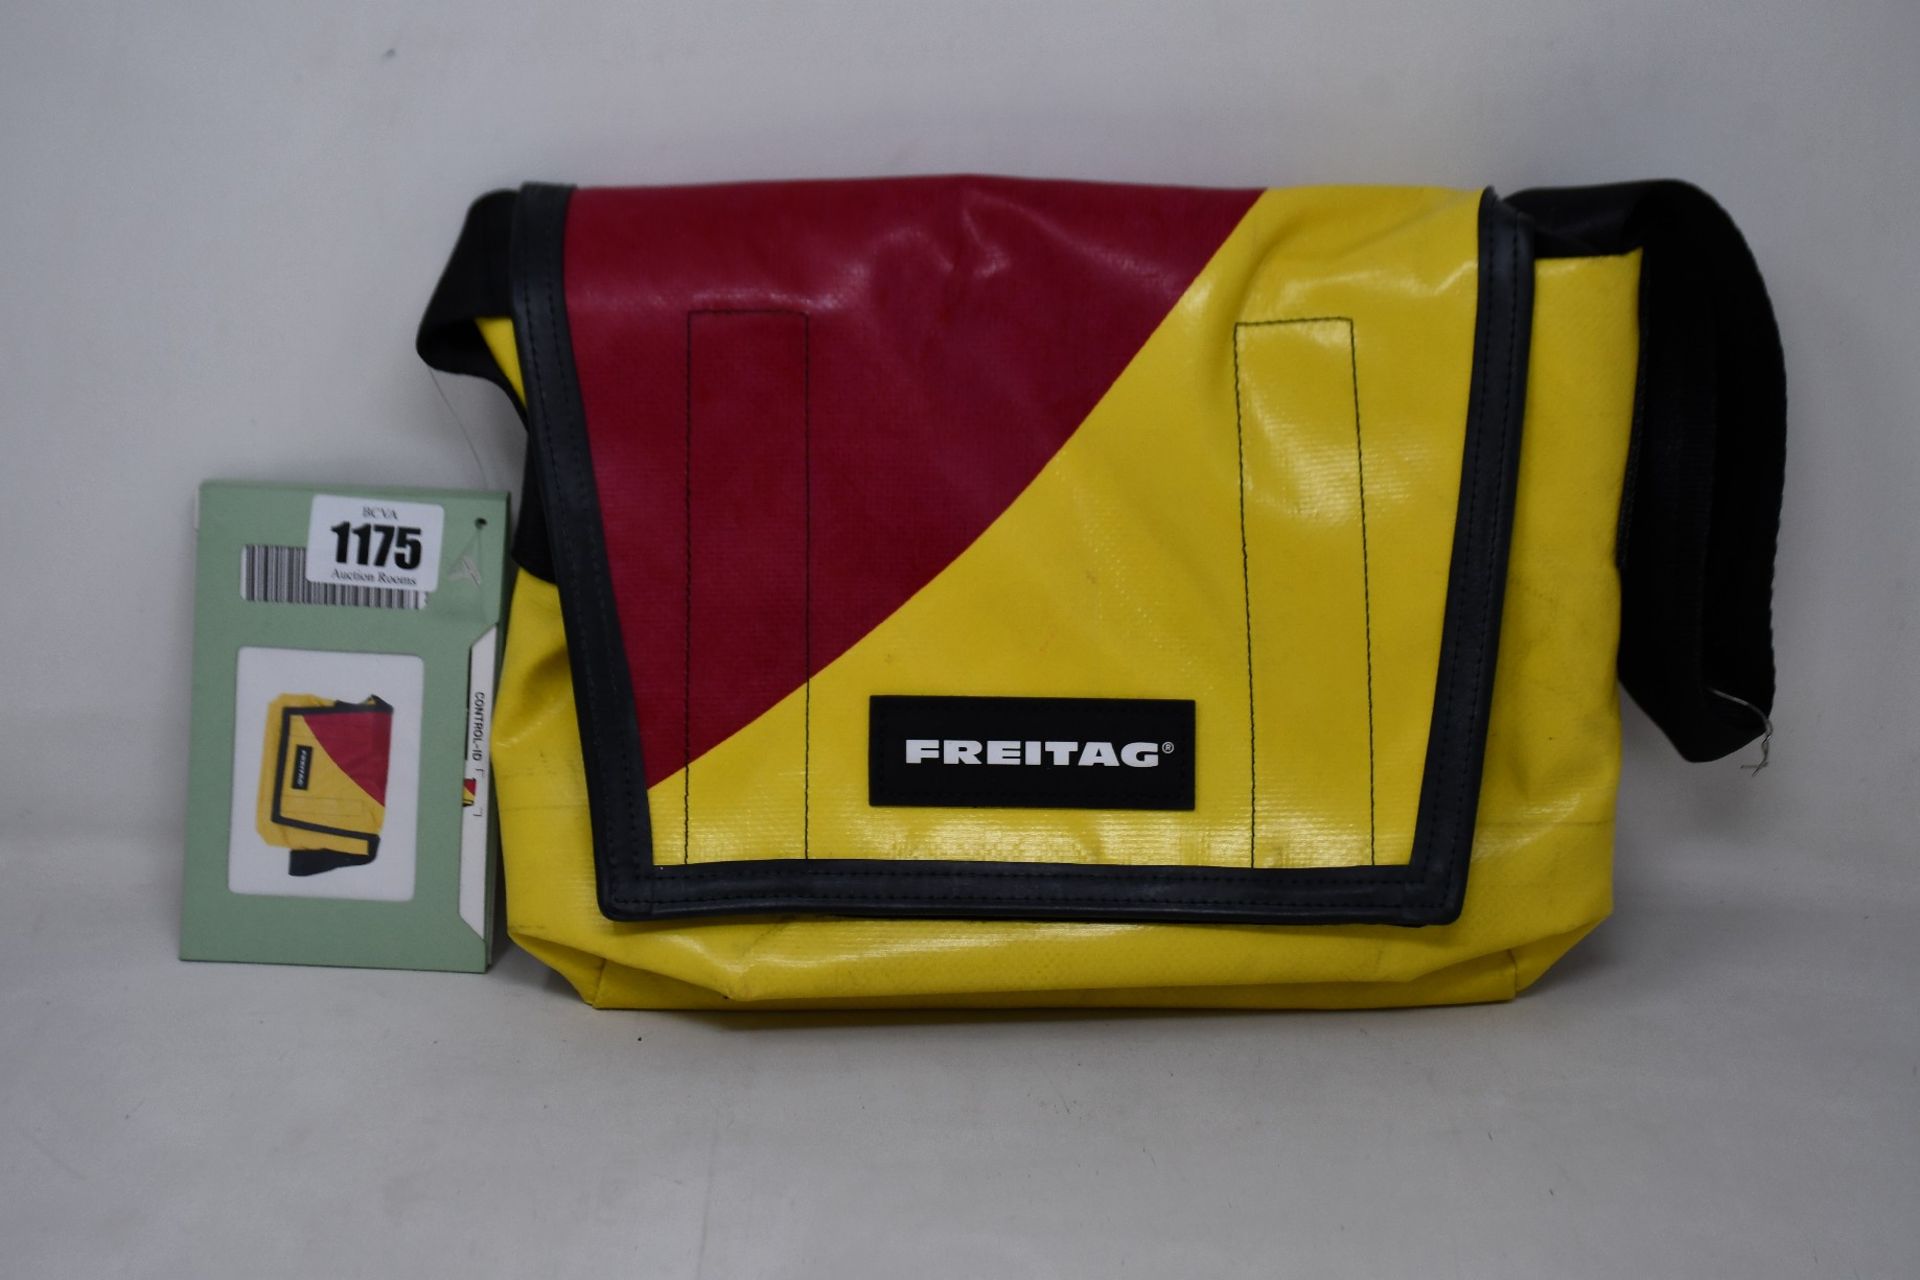 An as new Freitag F11 Lassie bag (RRP £180).